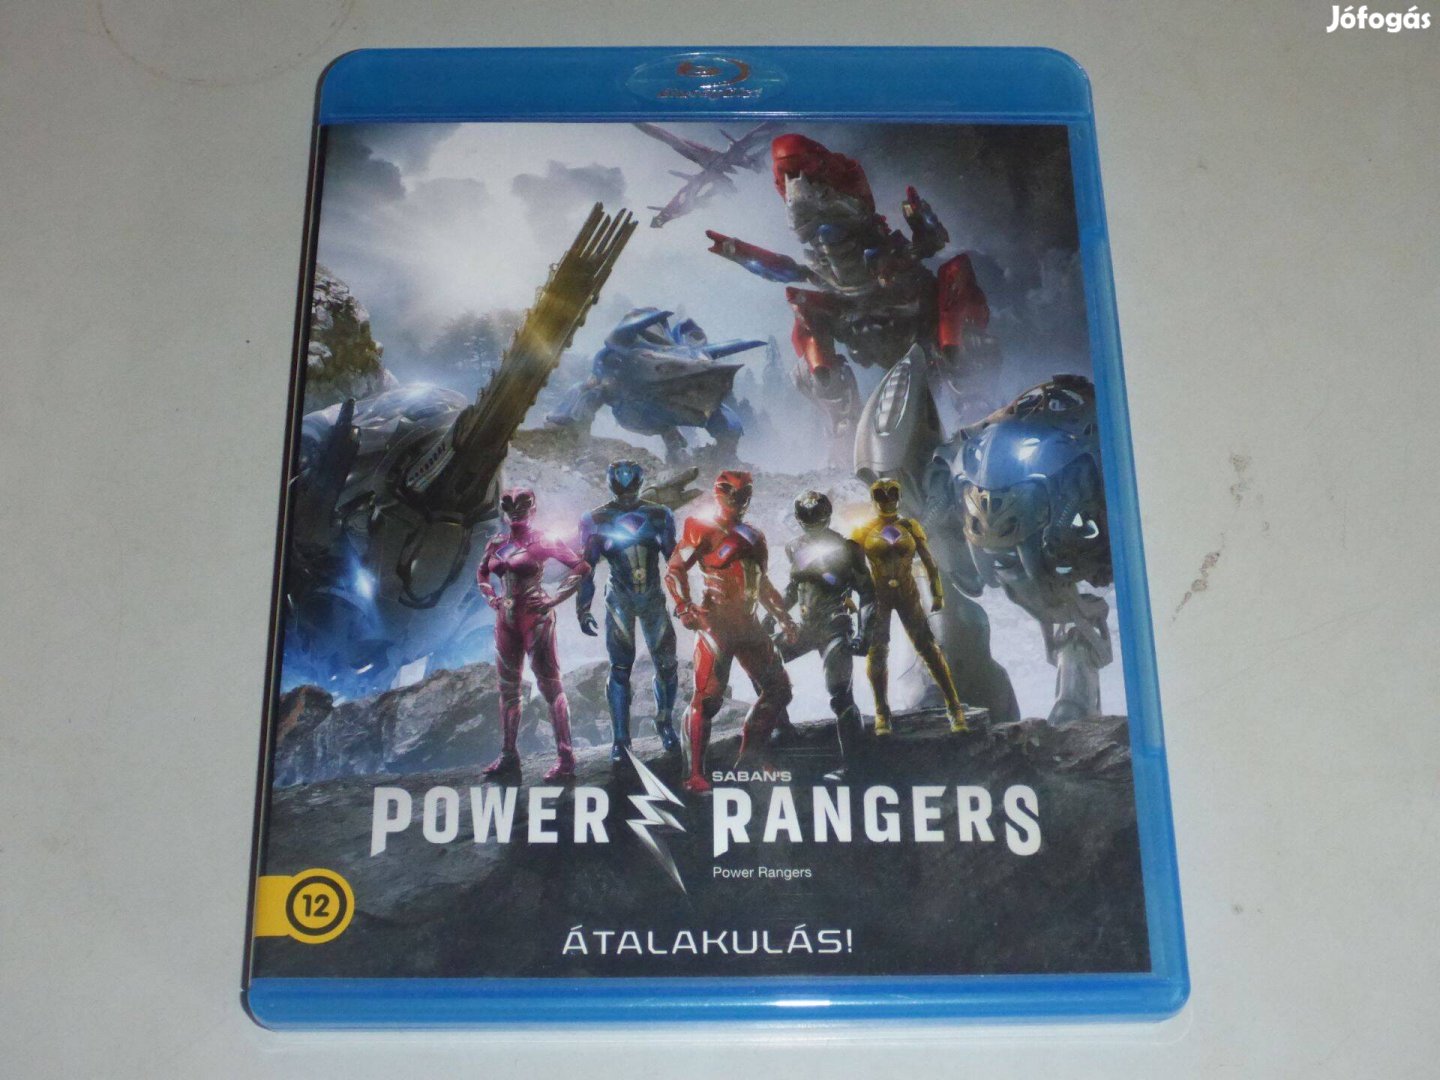 Power Rangers blu-ray film